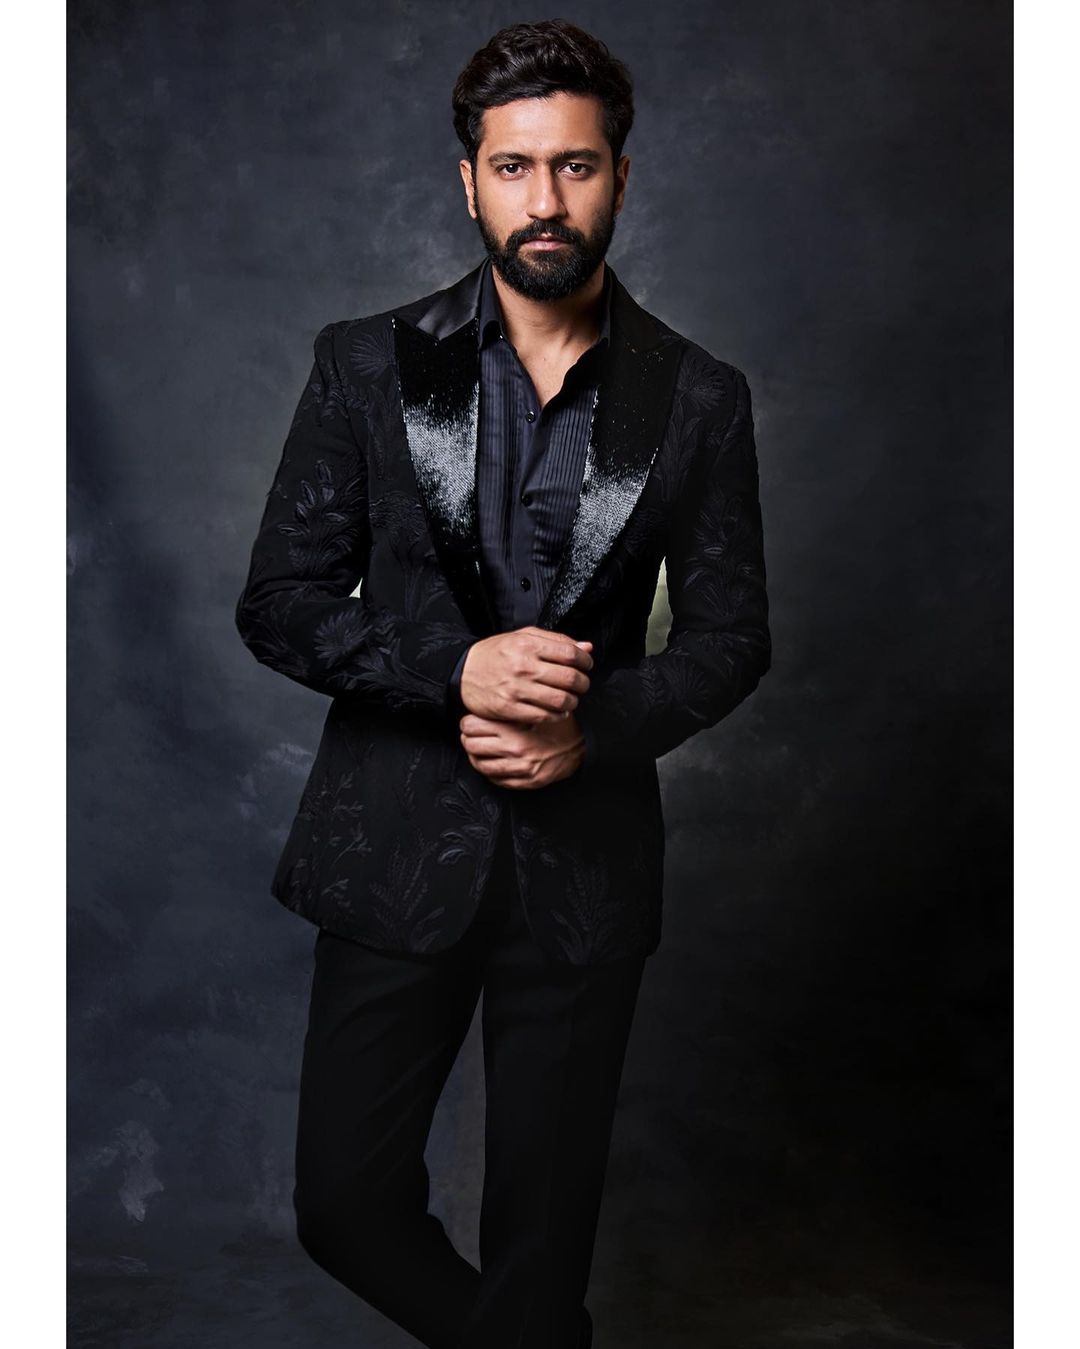 Vicky Kaushal exudes elegance in the black suit